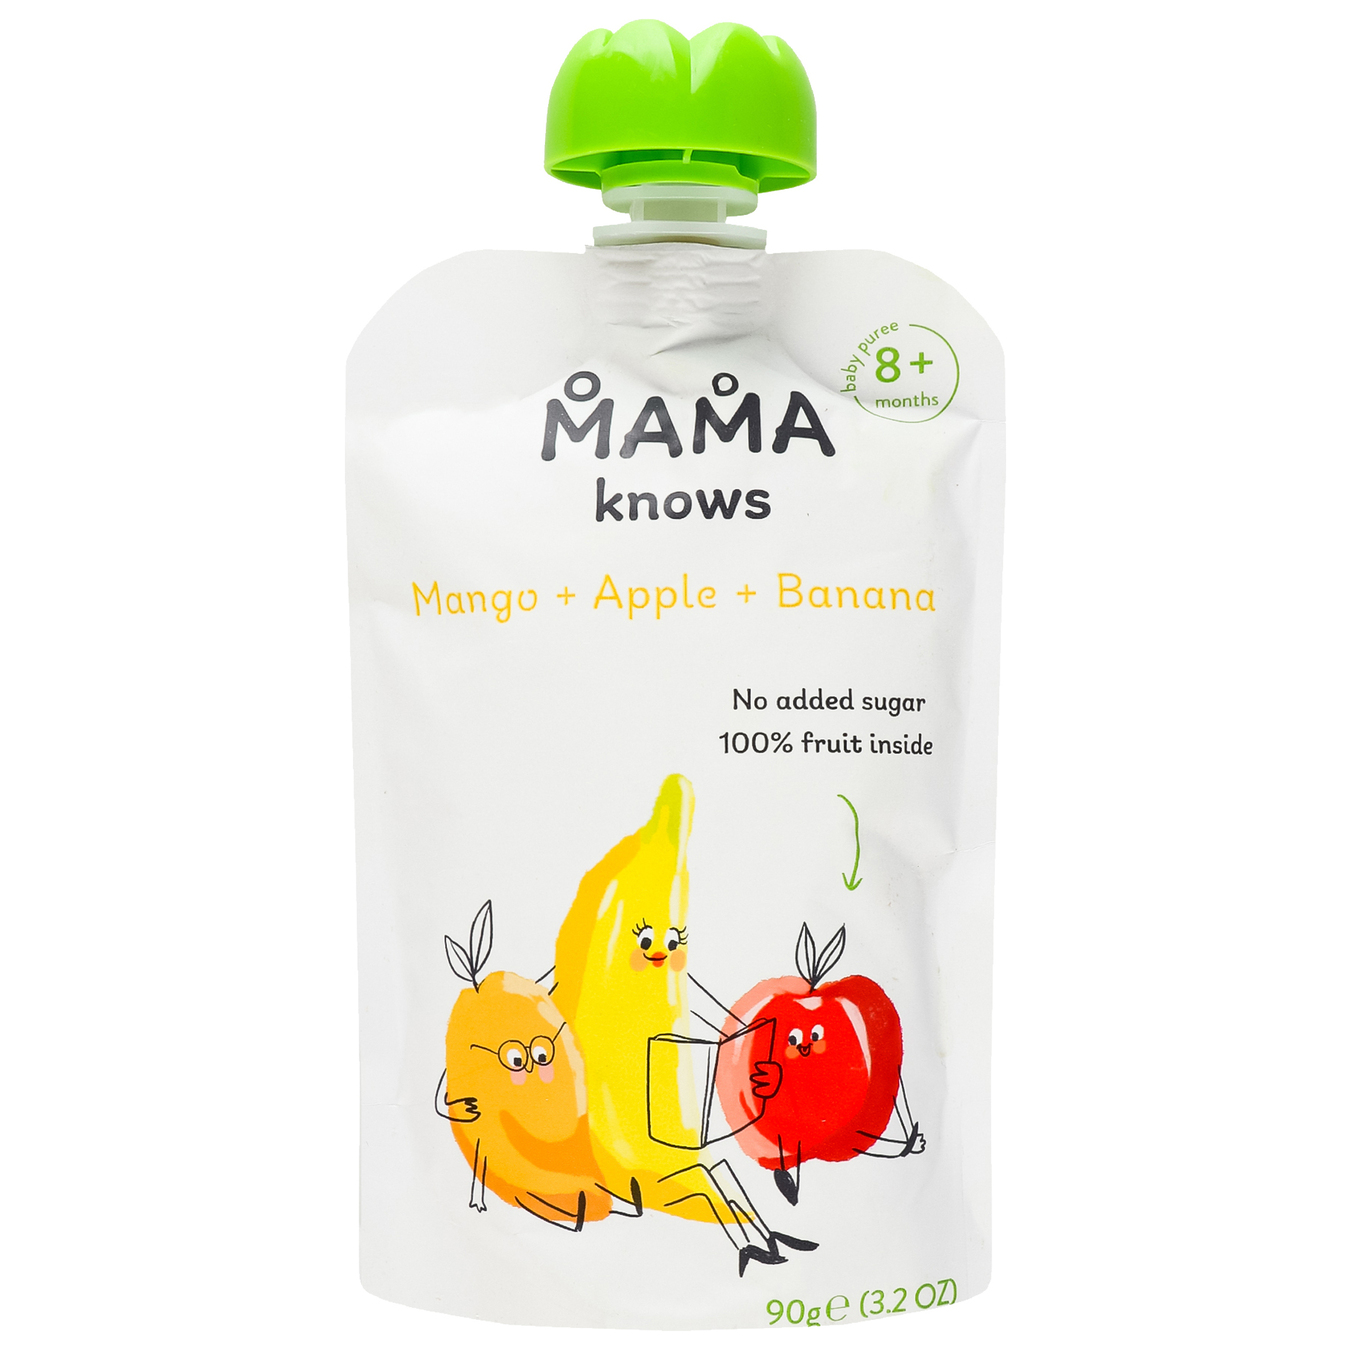 Mama knows puree from mango, apples and bananas 90g